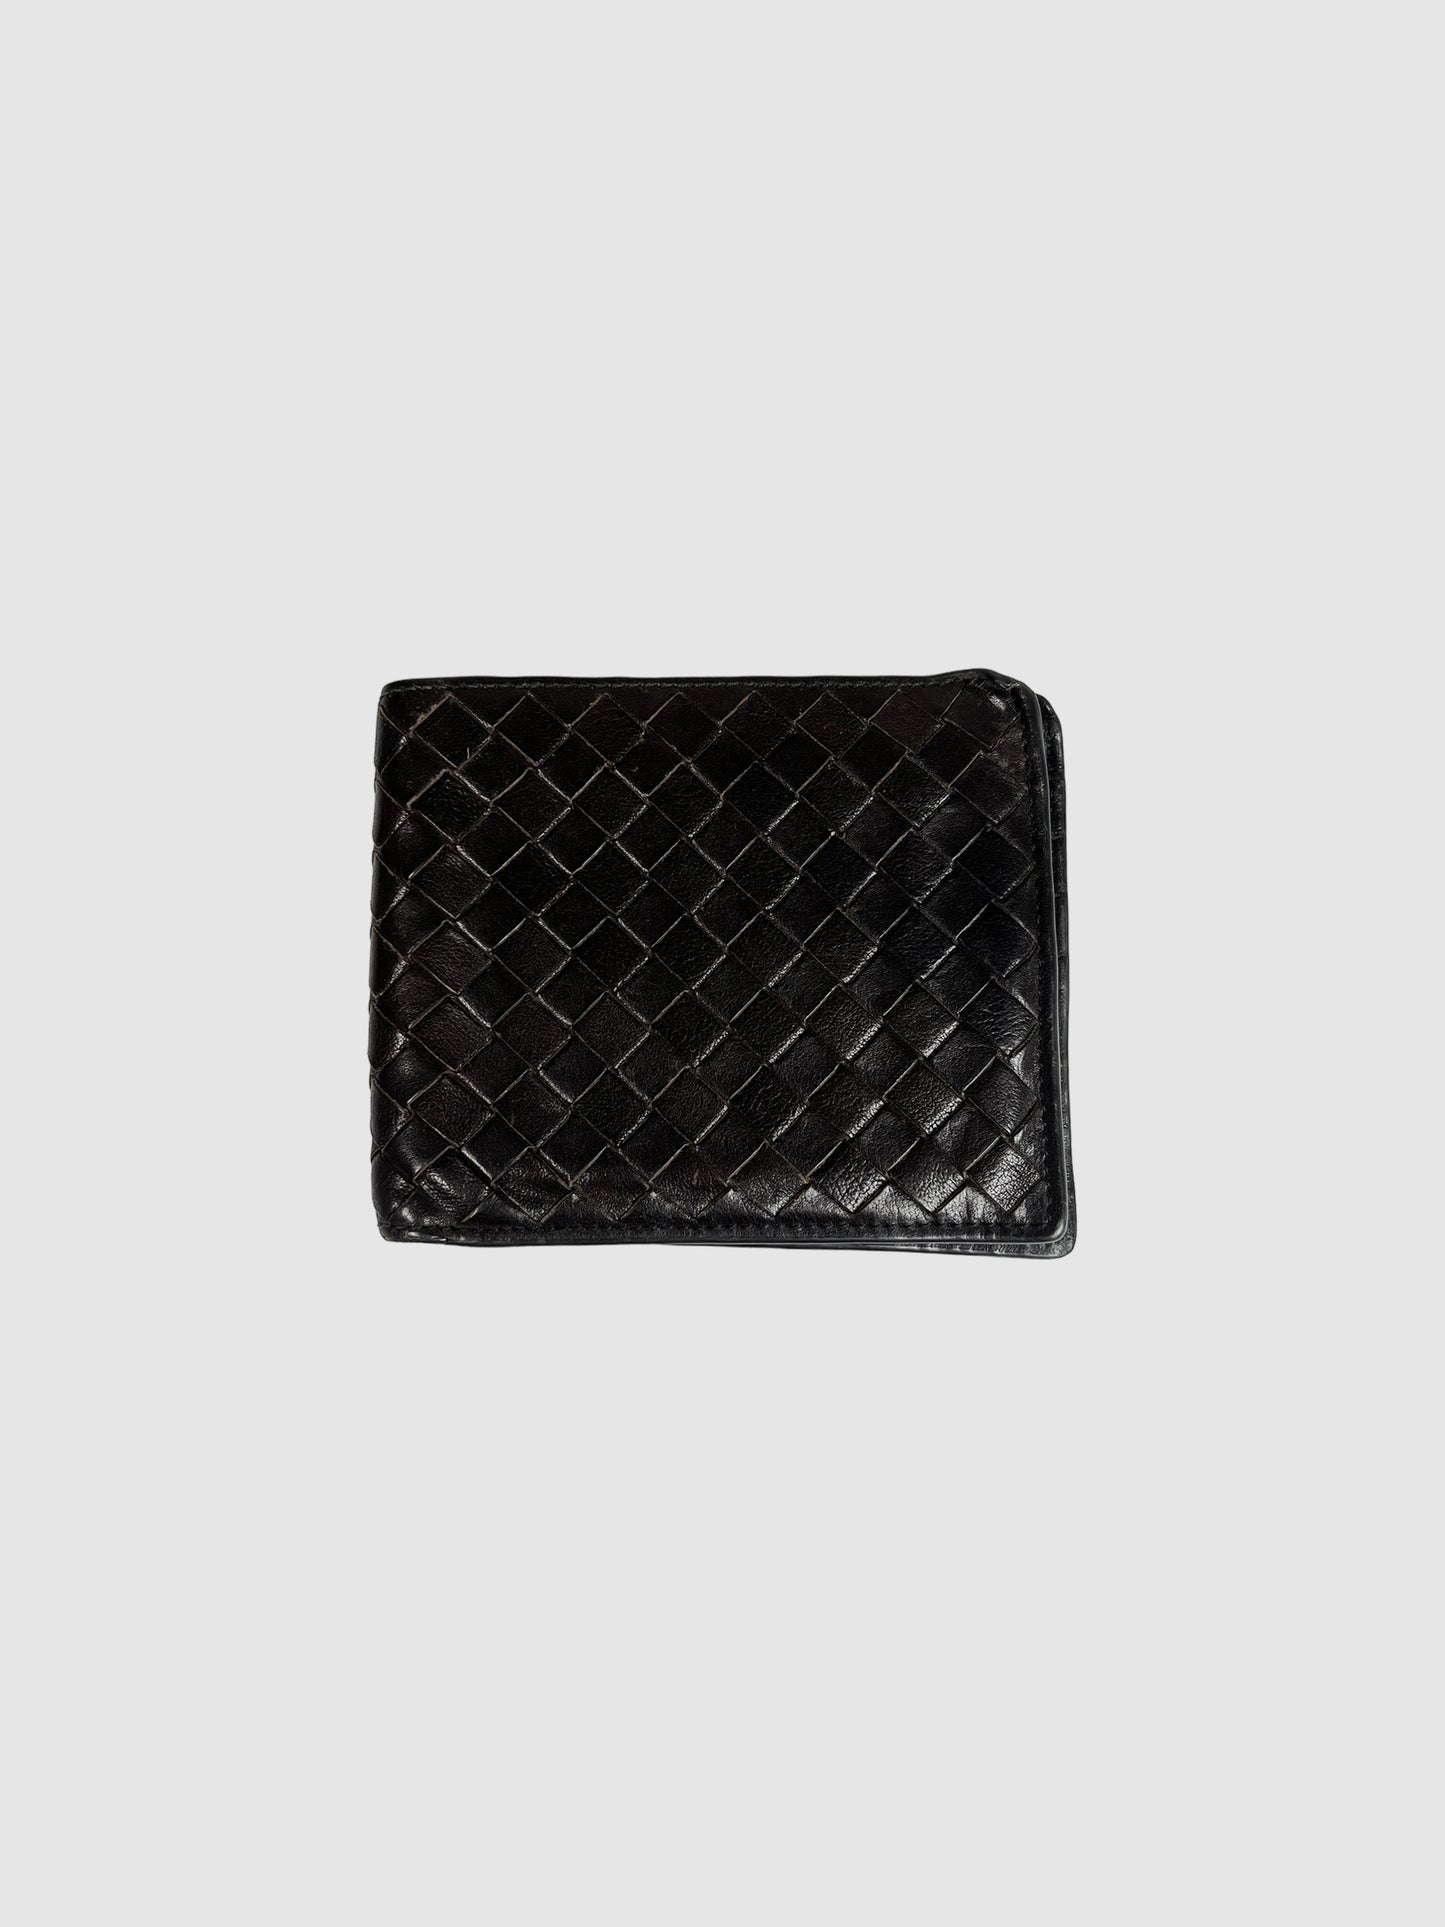 Bottega Veneta Intrecciato Weave Leather Wallet